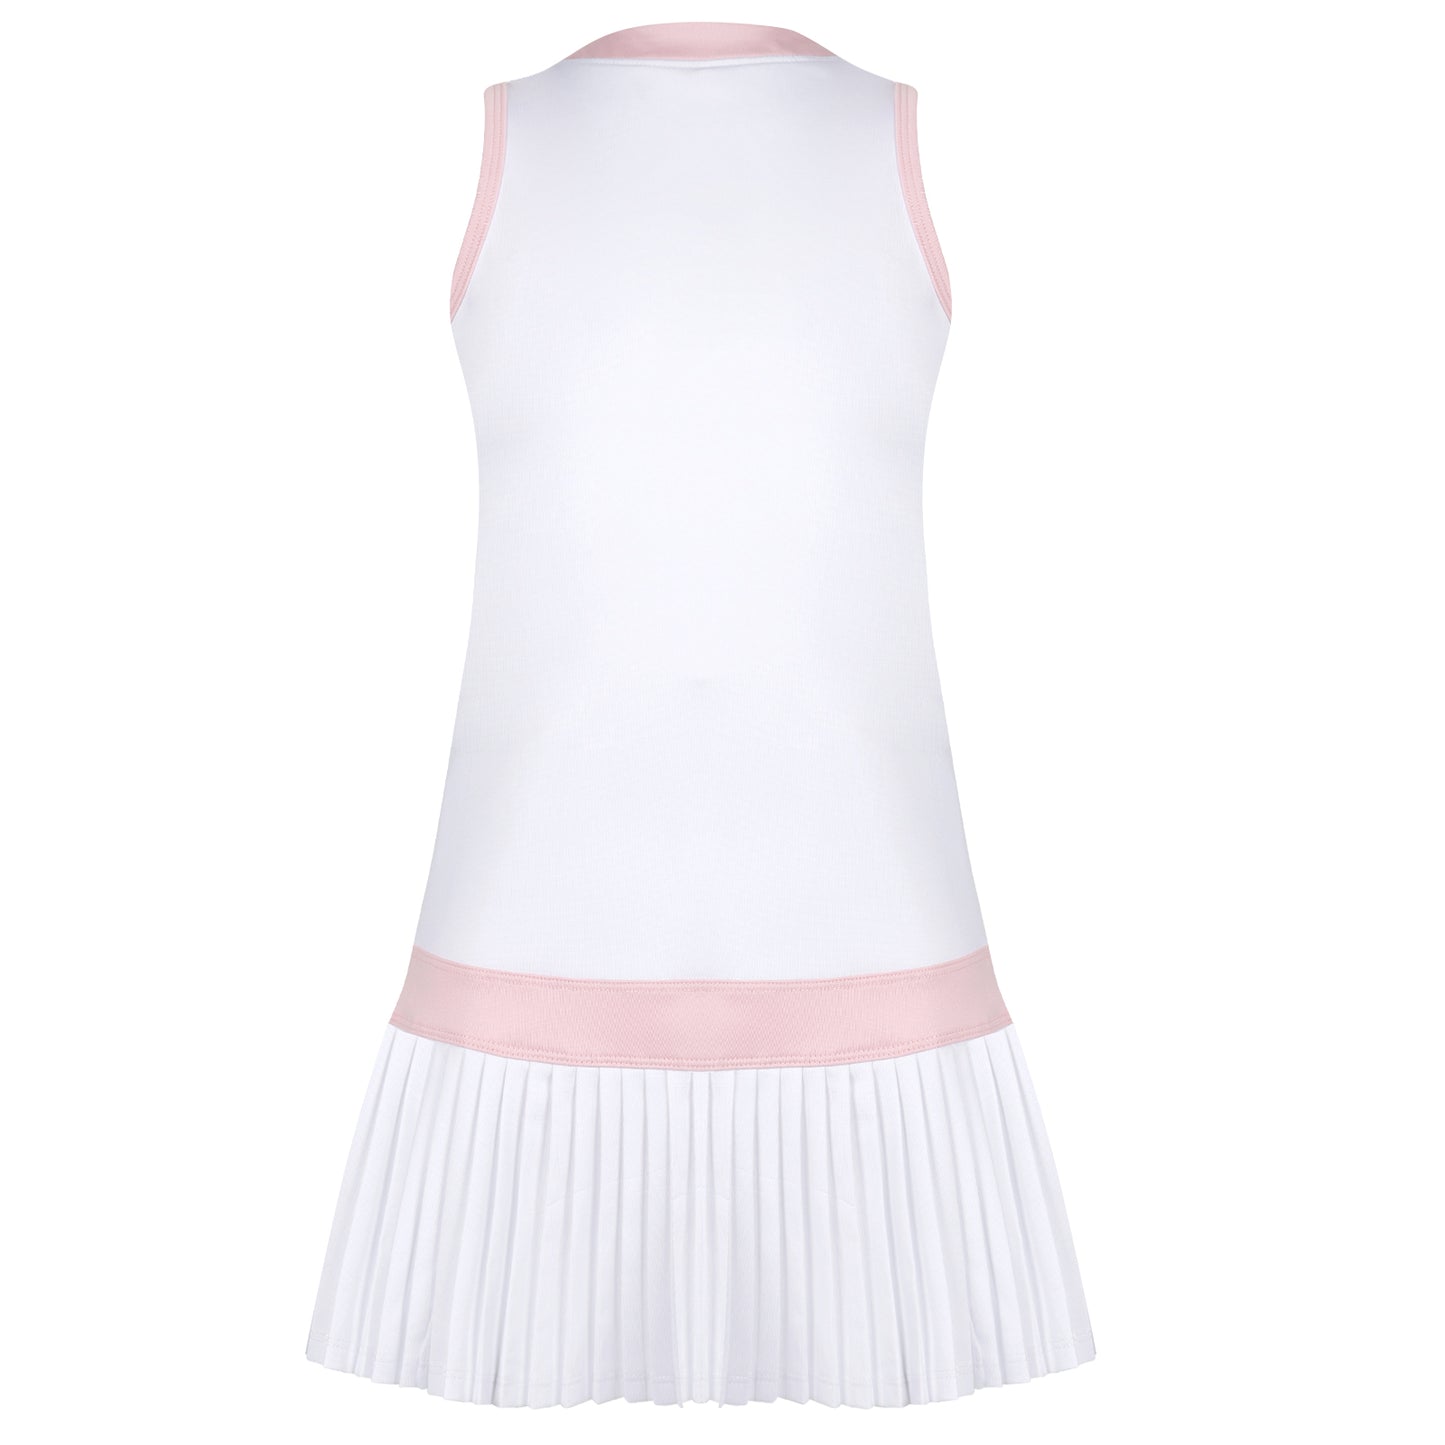 #Carnival Lights White & Pink Pleat Dress - New!